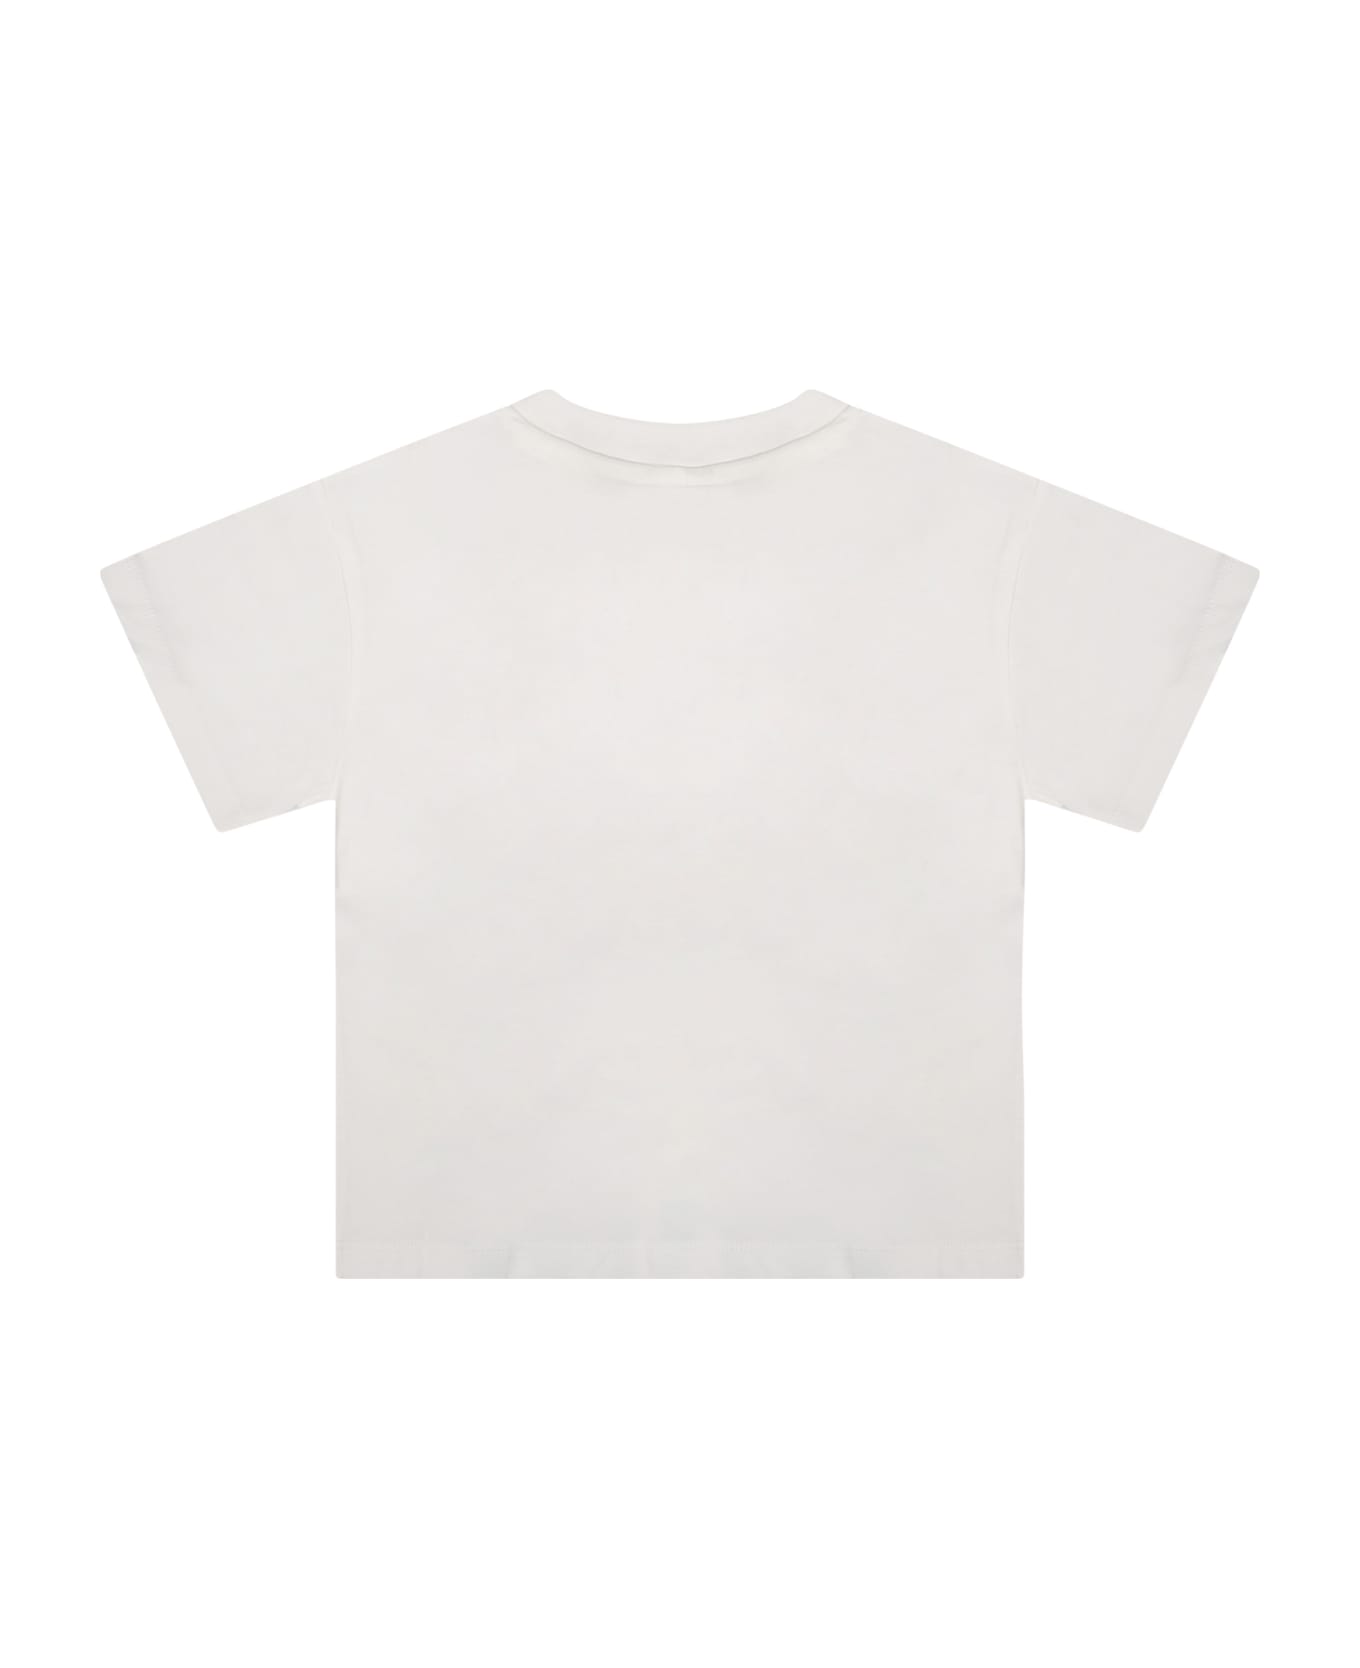 Stella McCartney Kids White T-shirt For Baby Boy With Fruit Print - White